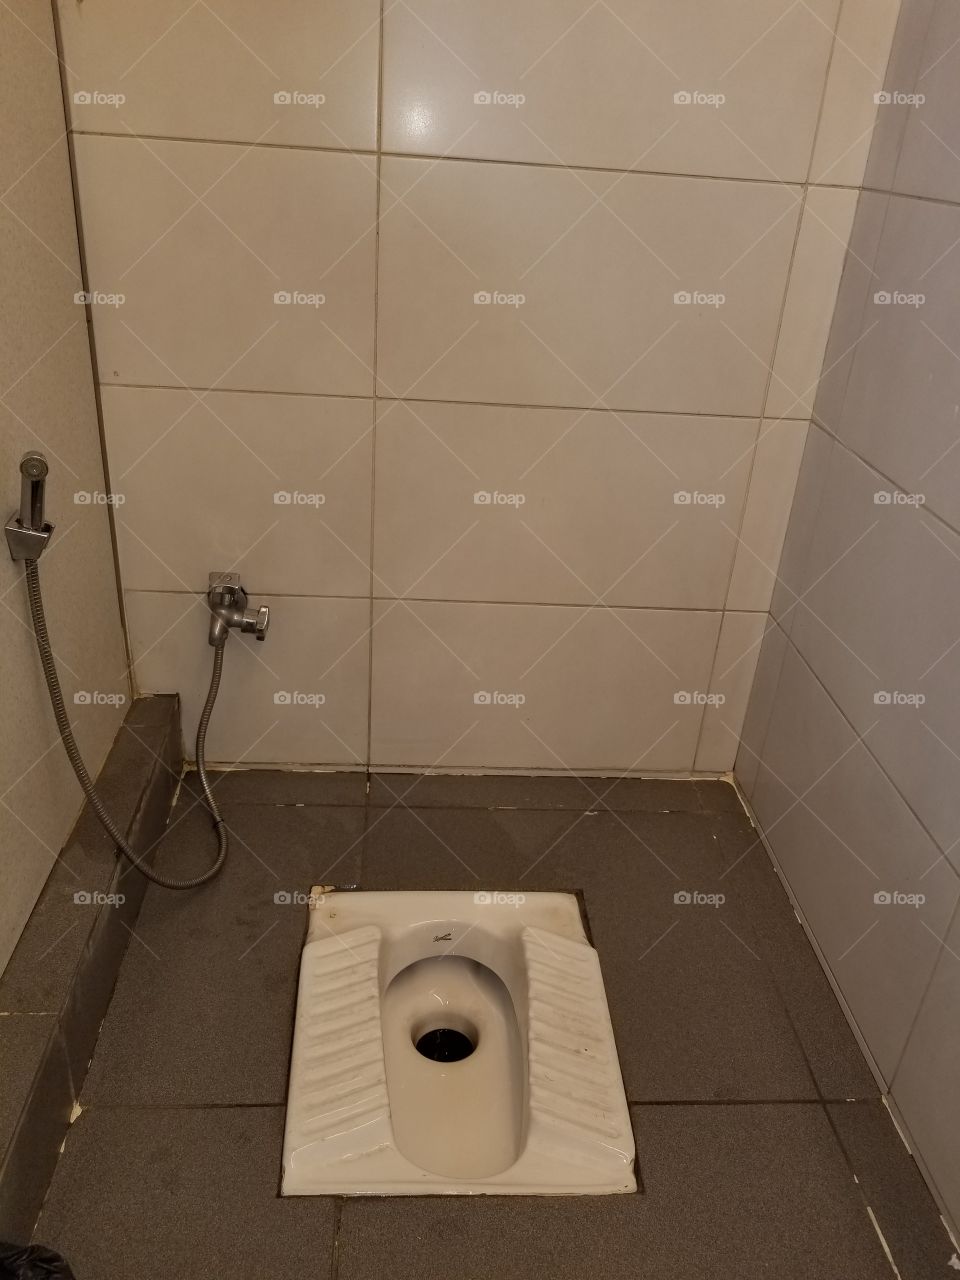 Bathroom in Delhi, India